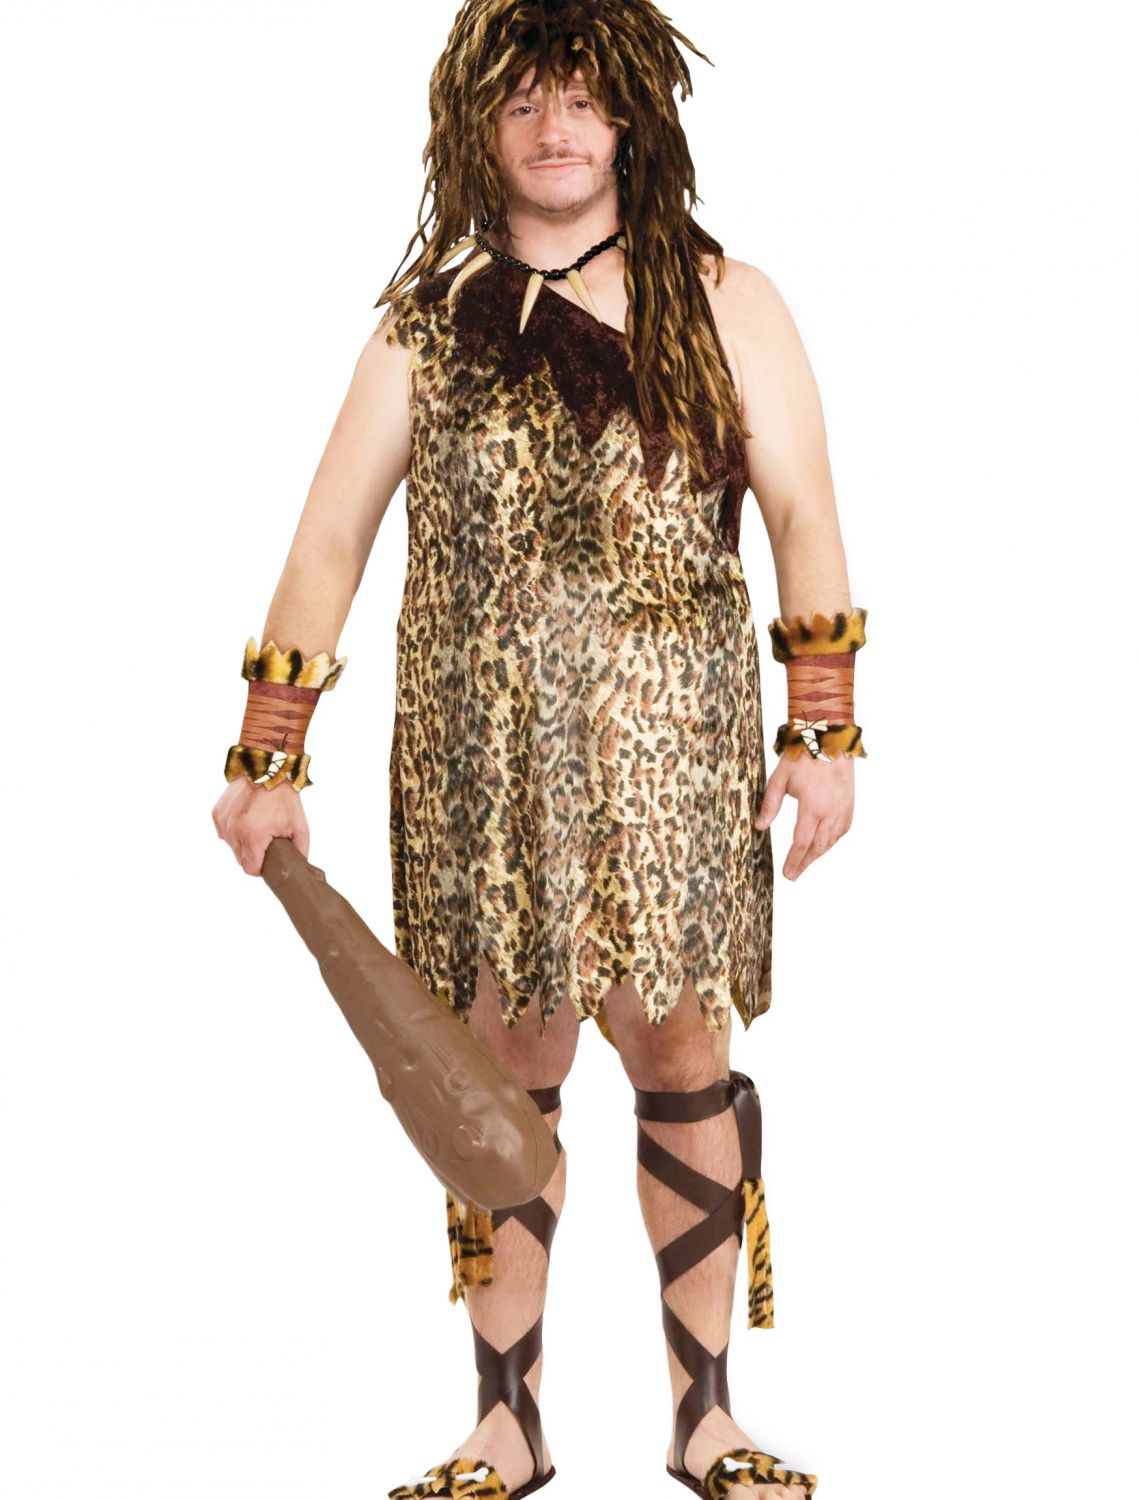 Cavewomen costumes